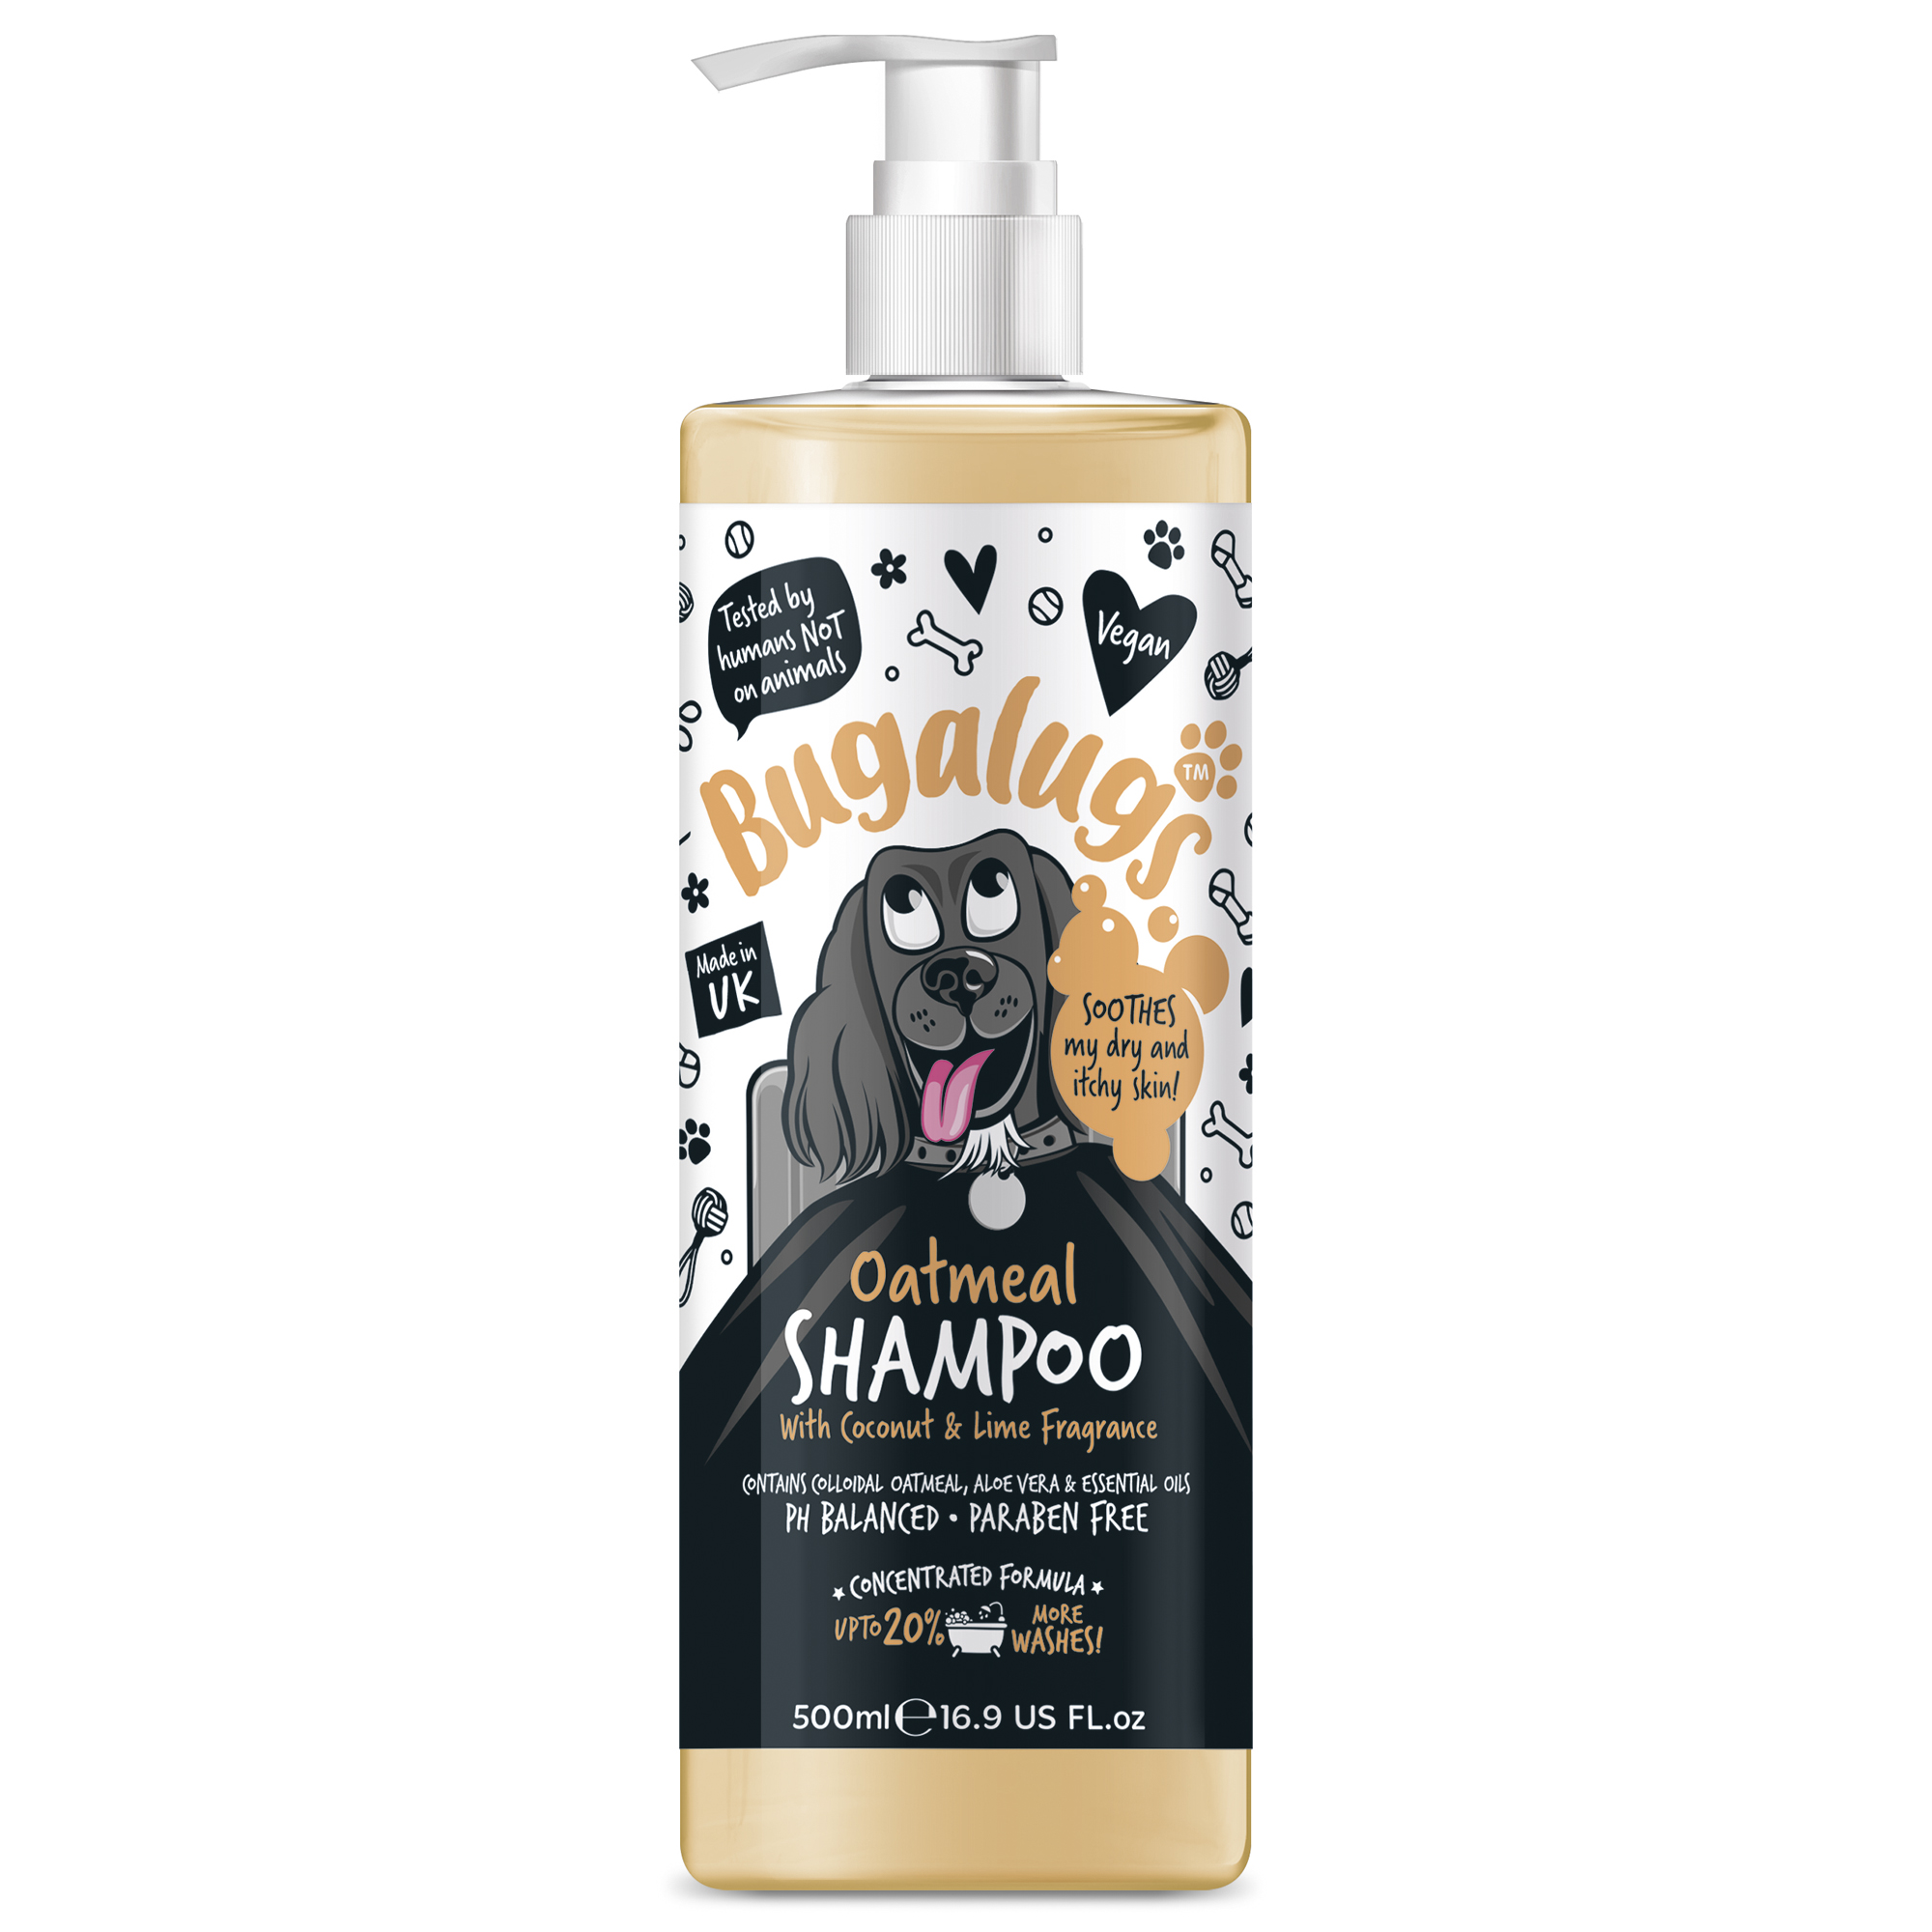 Itchy Dog Shampoo - Case  Golden Group International, Ltd